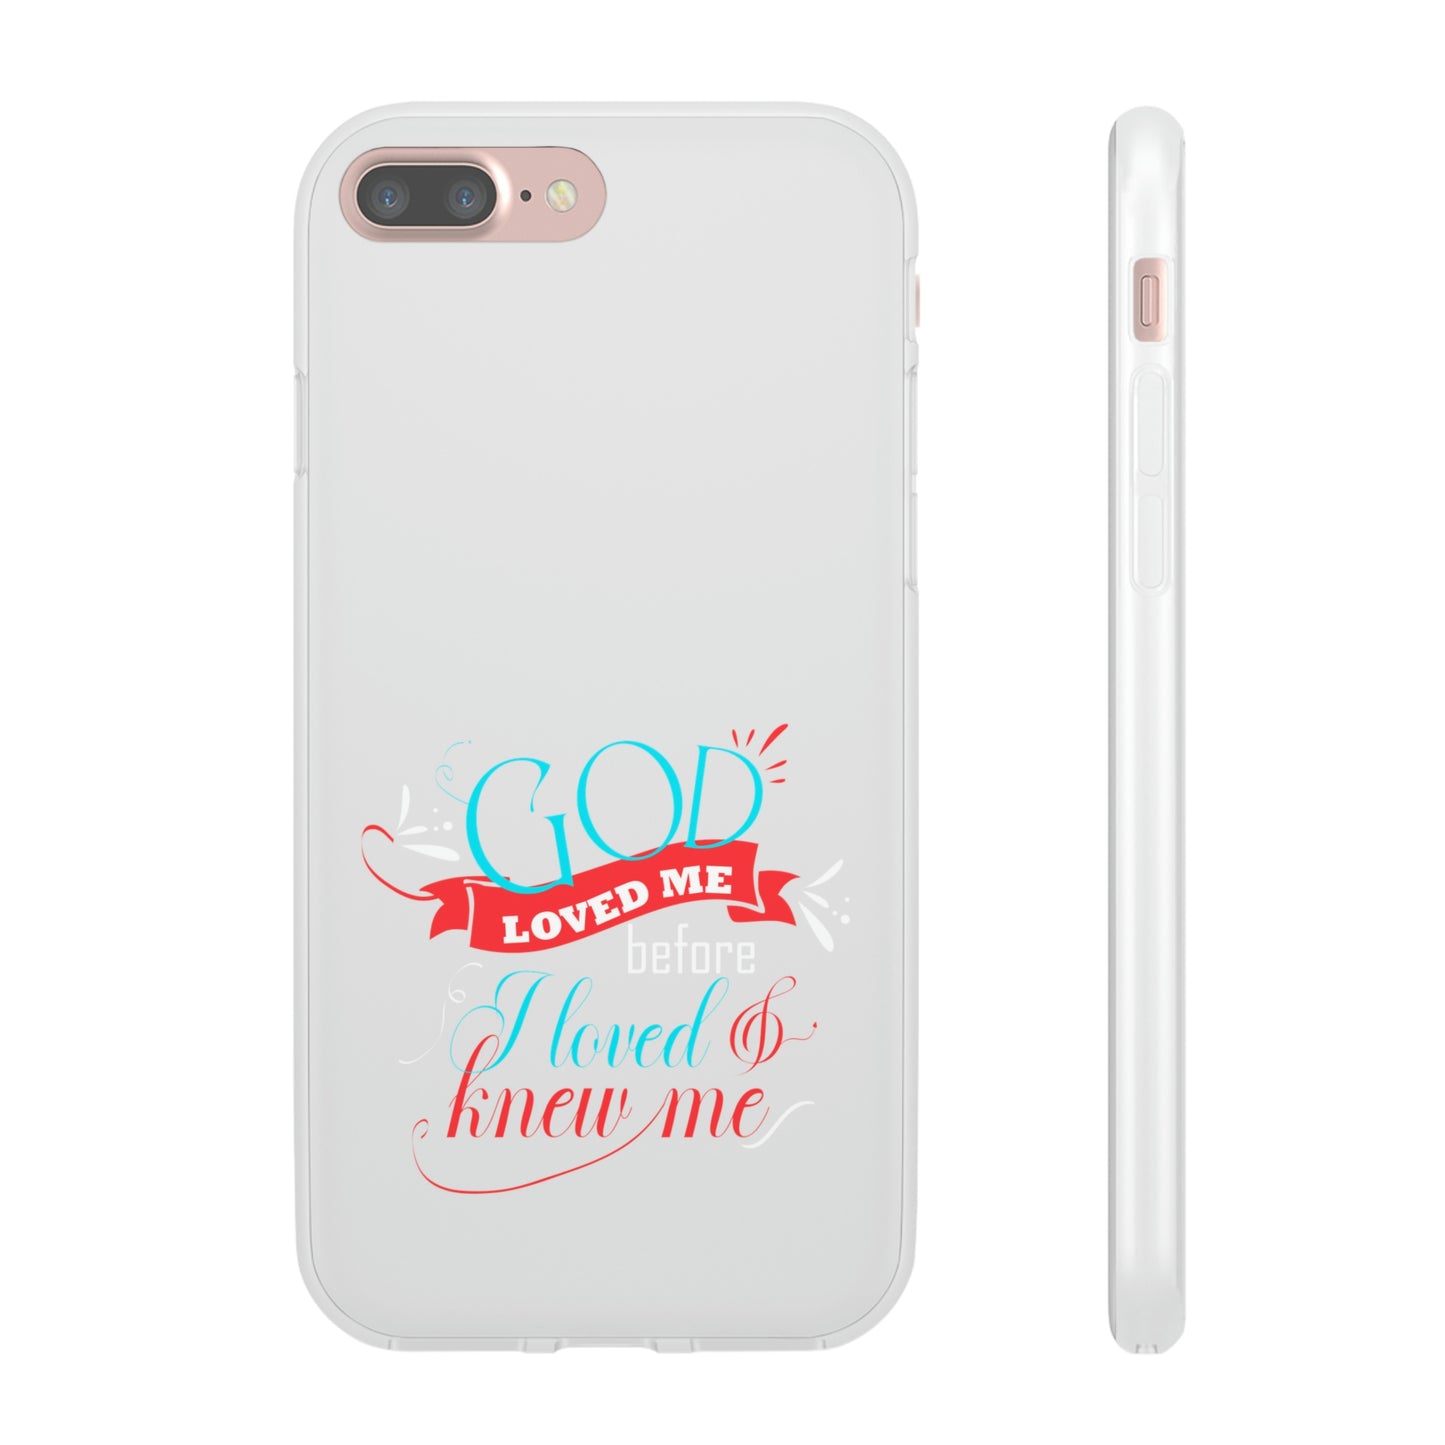 God Loved Me Before I Loved & Knew Me Flexi Phone Case